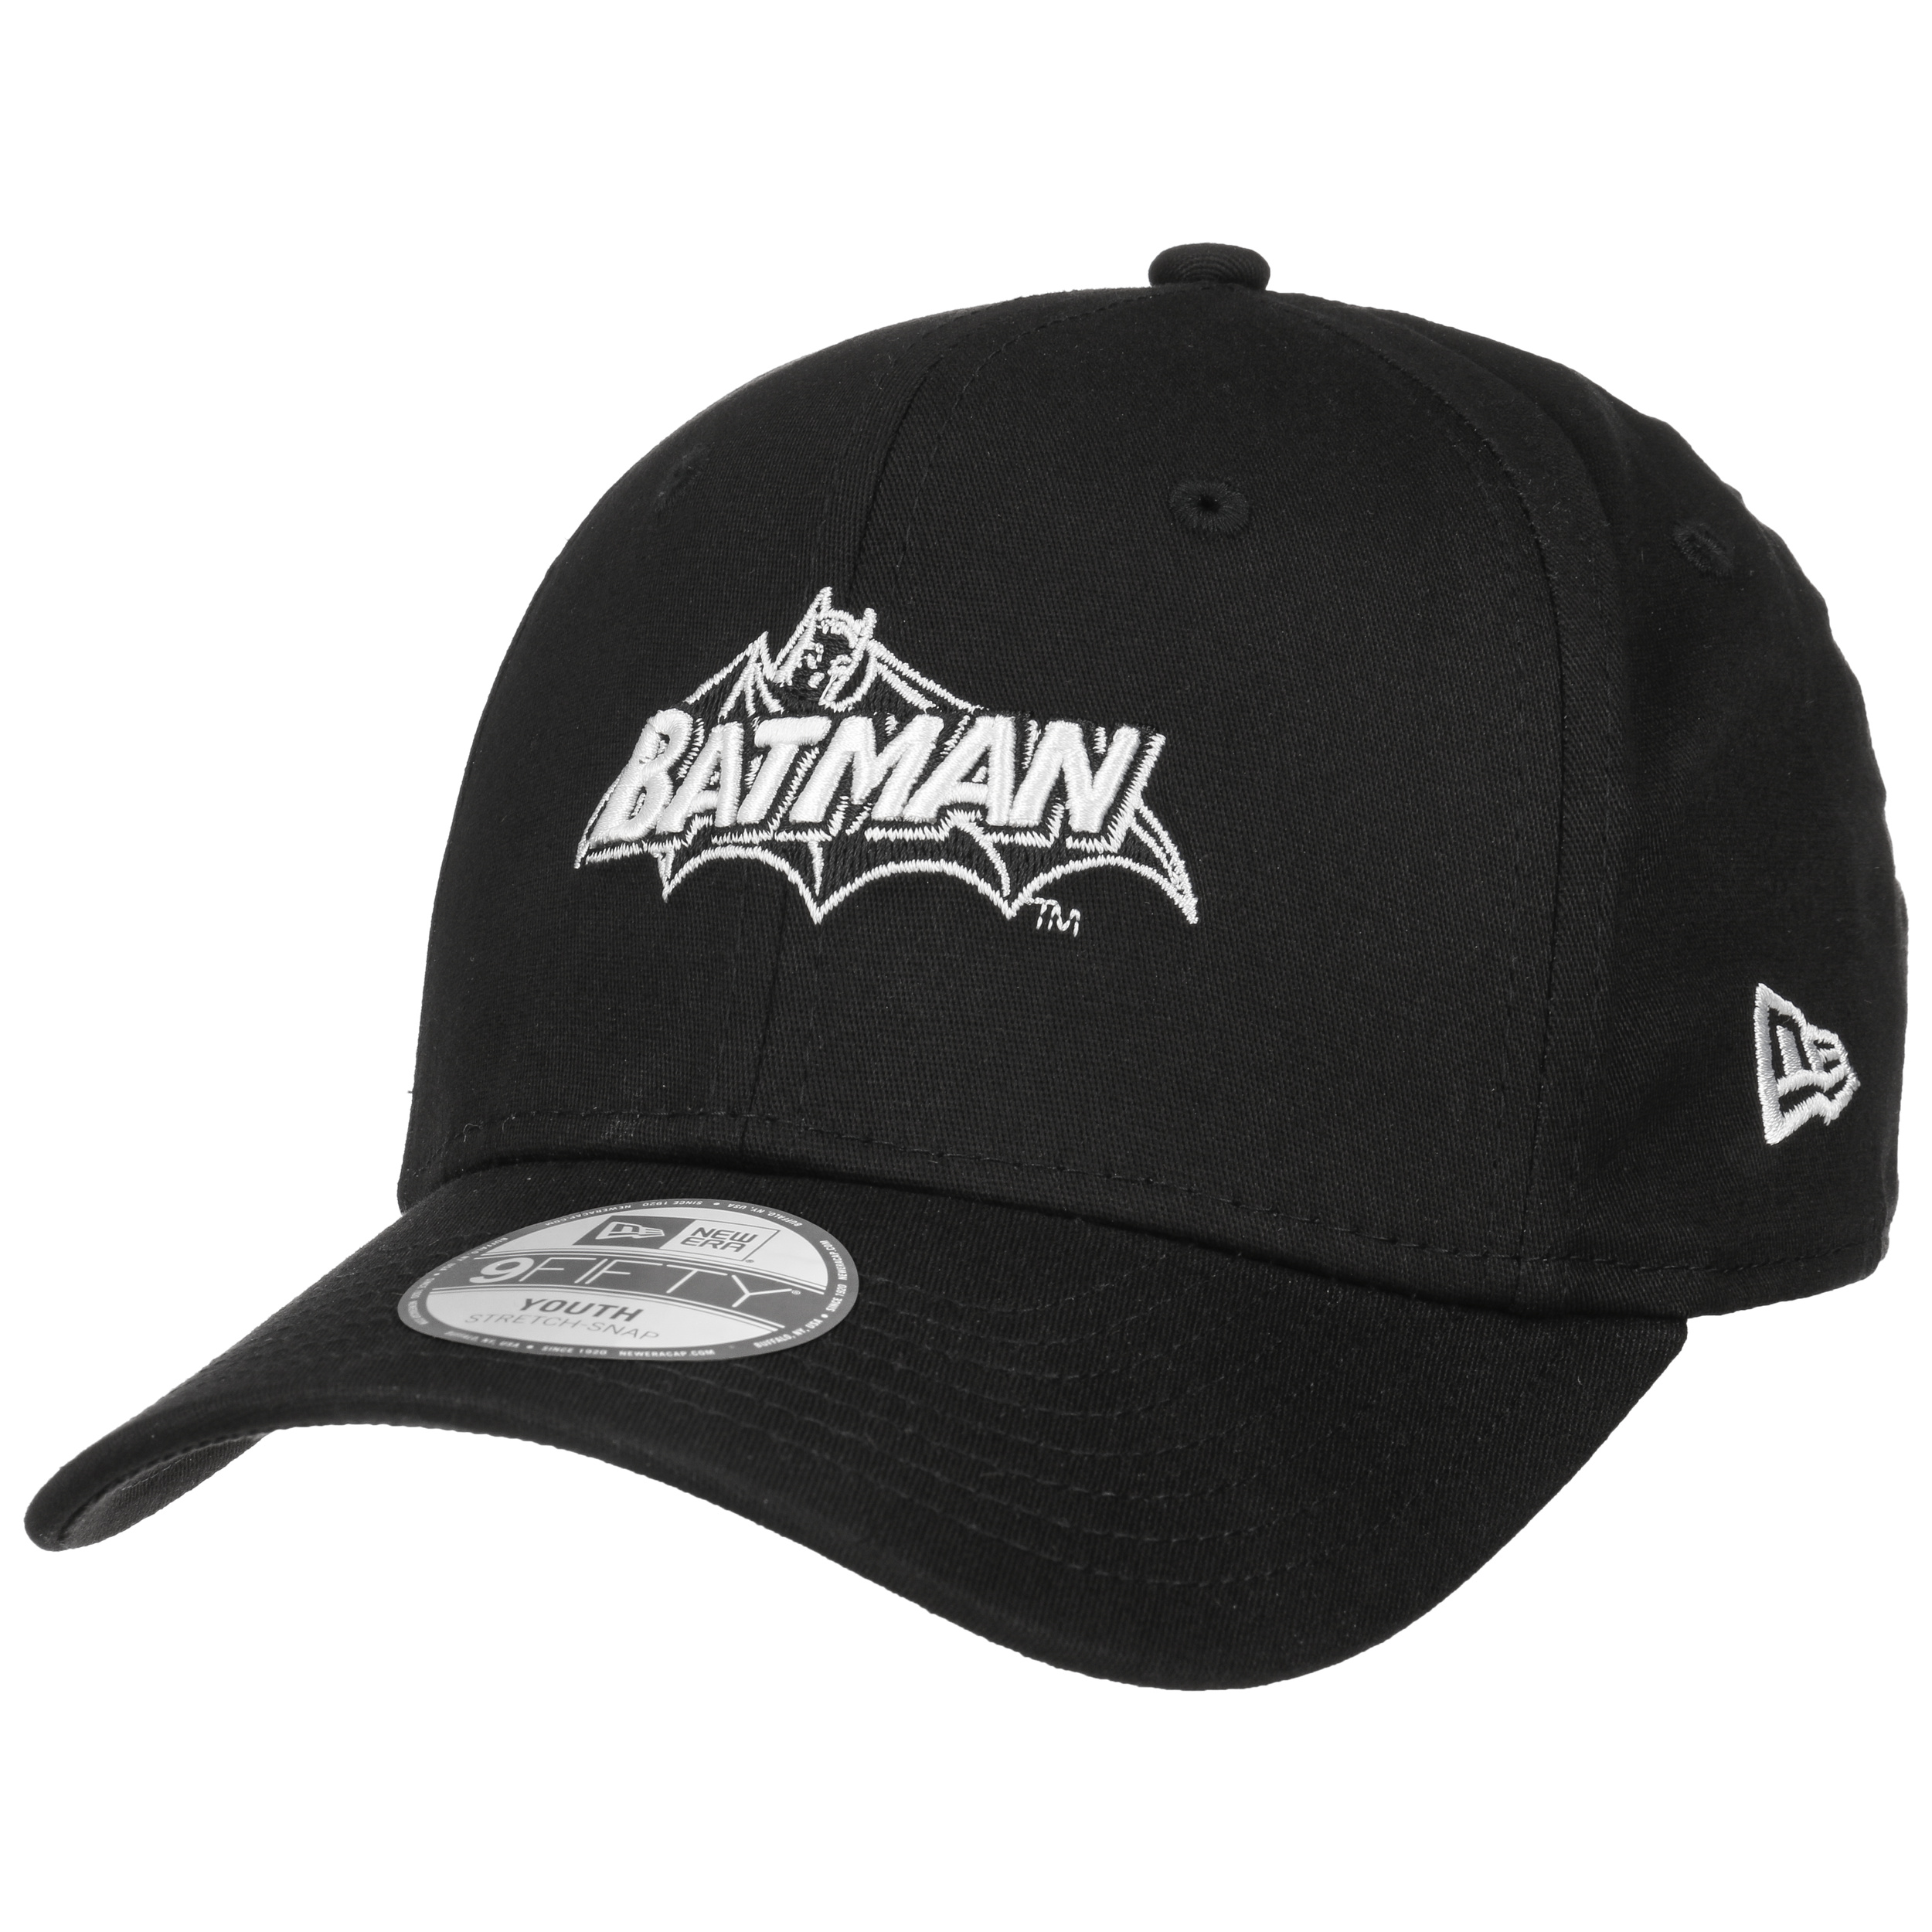 New Batman Snapback Adjustable Grey Kids Children baseball cap flat hat Cosplay